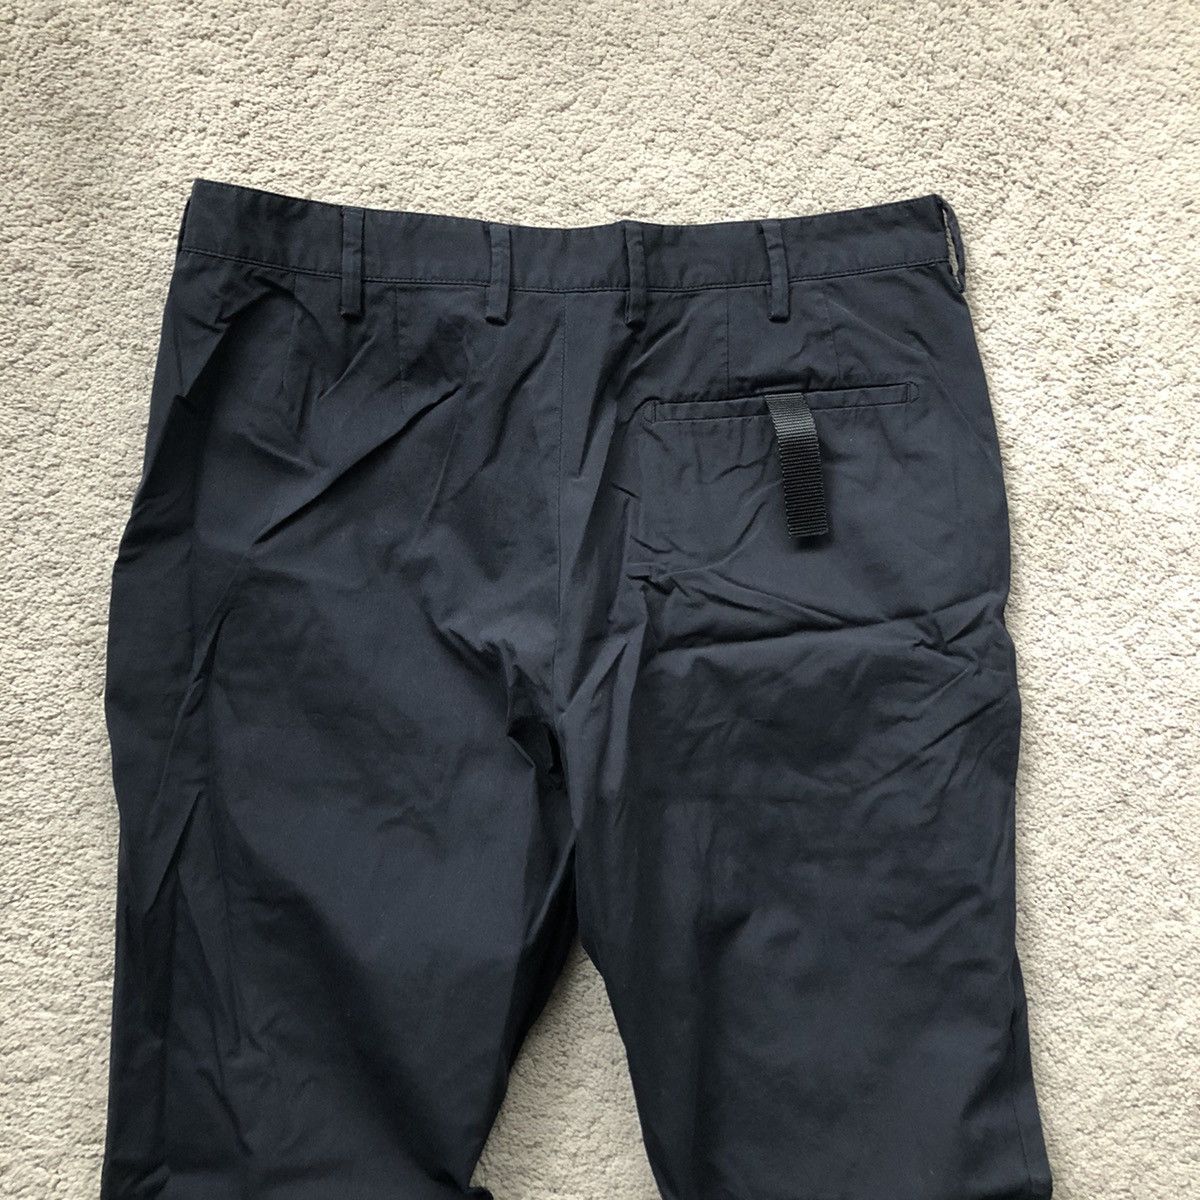 Prada Prada Technical Trousers Size US 32 / EU 48 - 4 Thumbnail